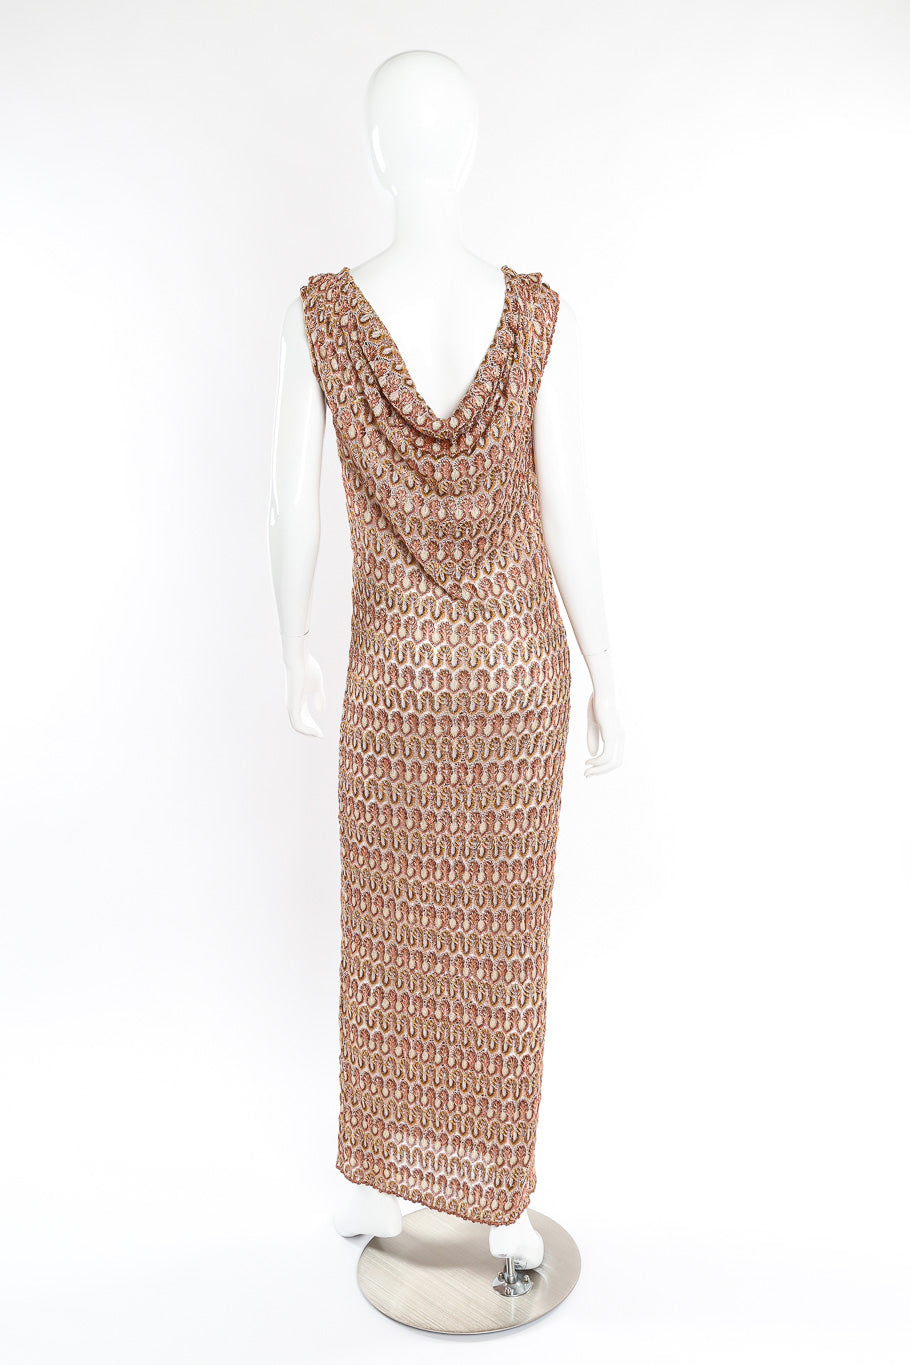 Missoni metallic knit dress on mannequin @recessla